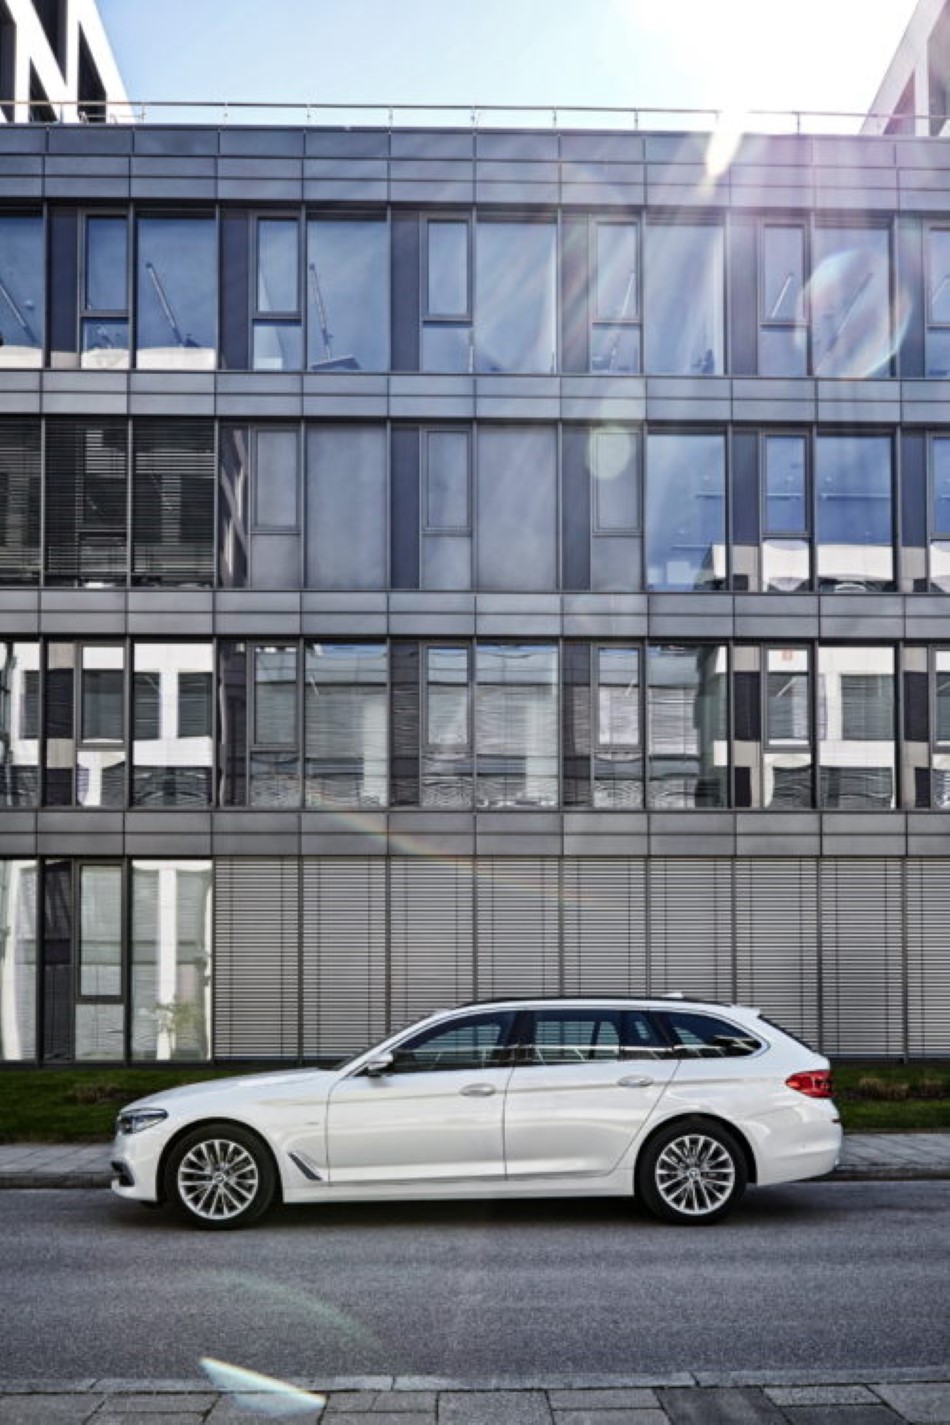 2017 BMW 520d Touring resim galerisi